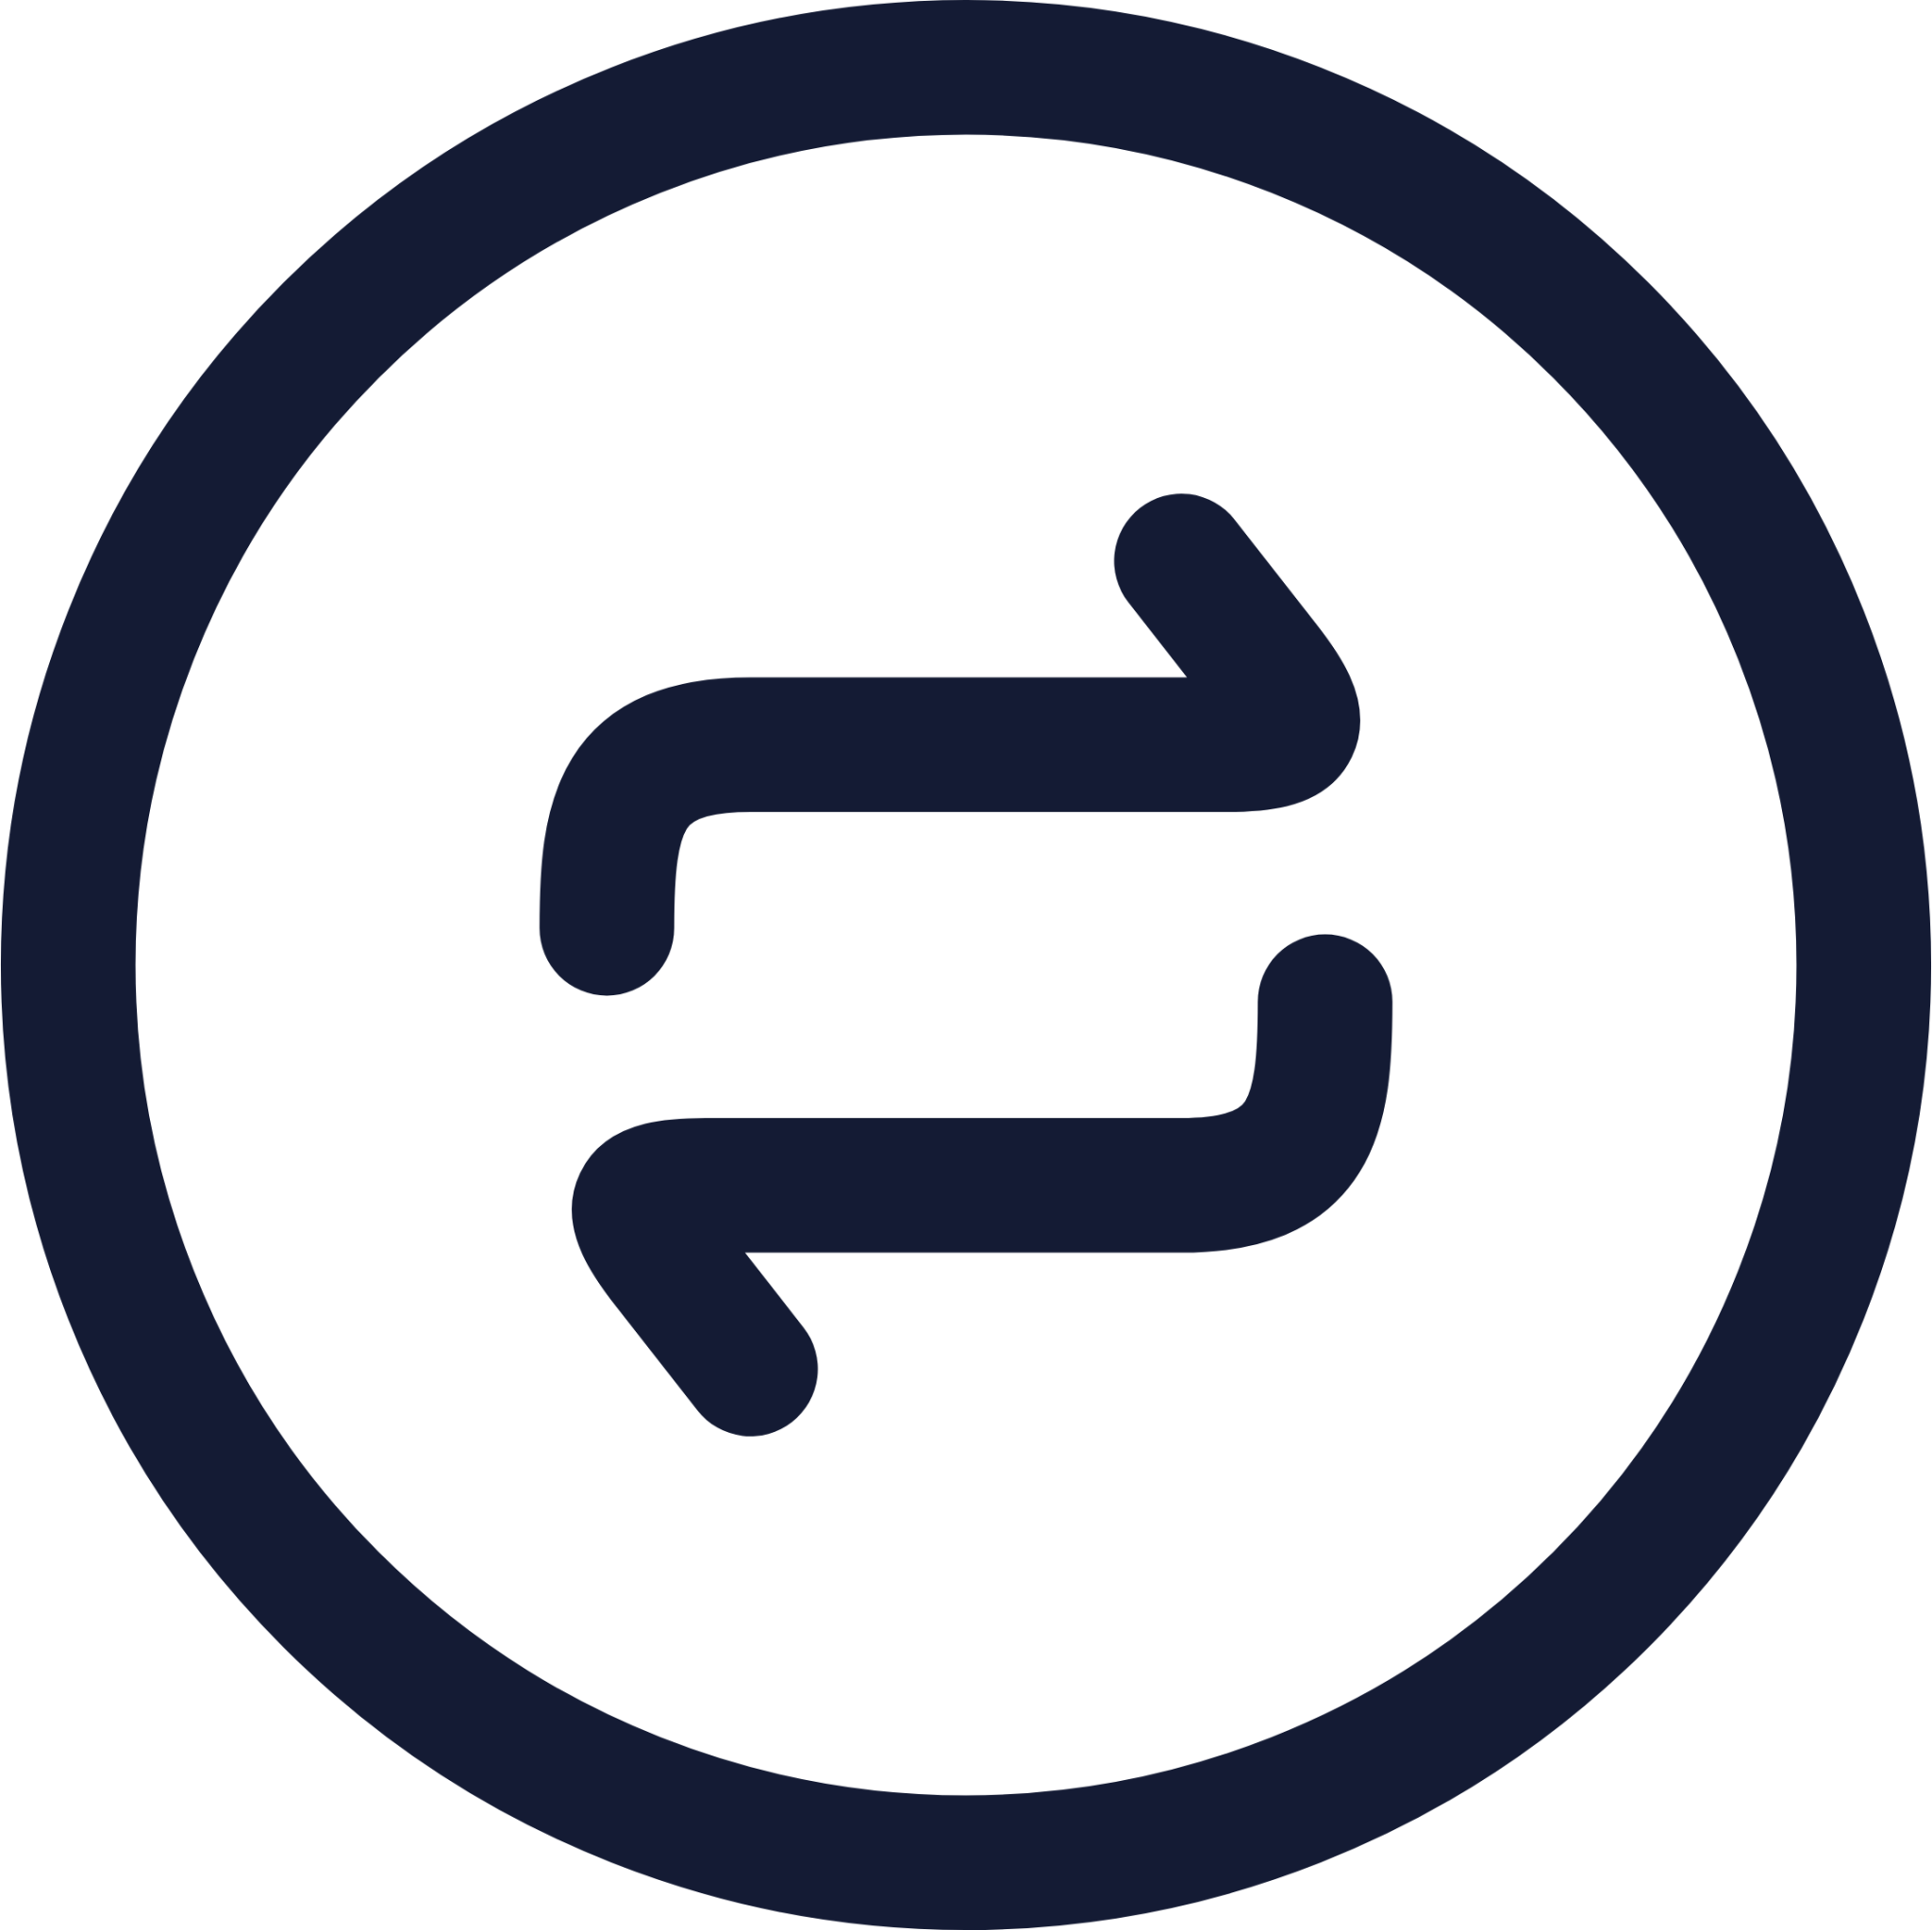 circle arrow reload icon